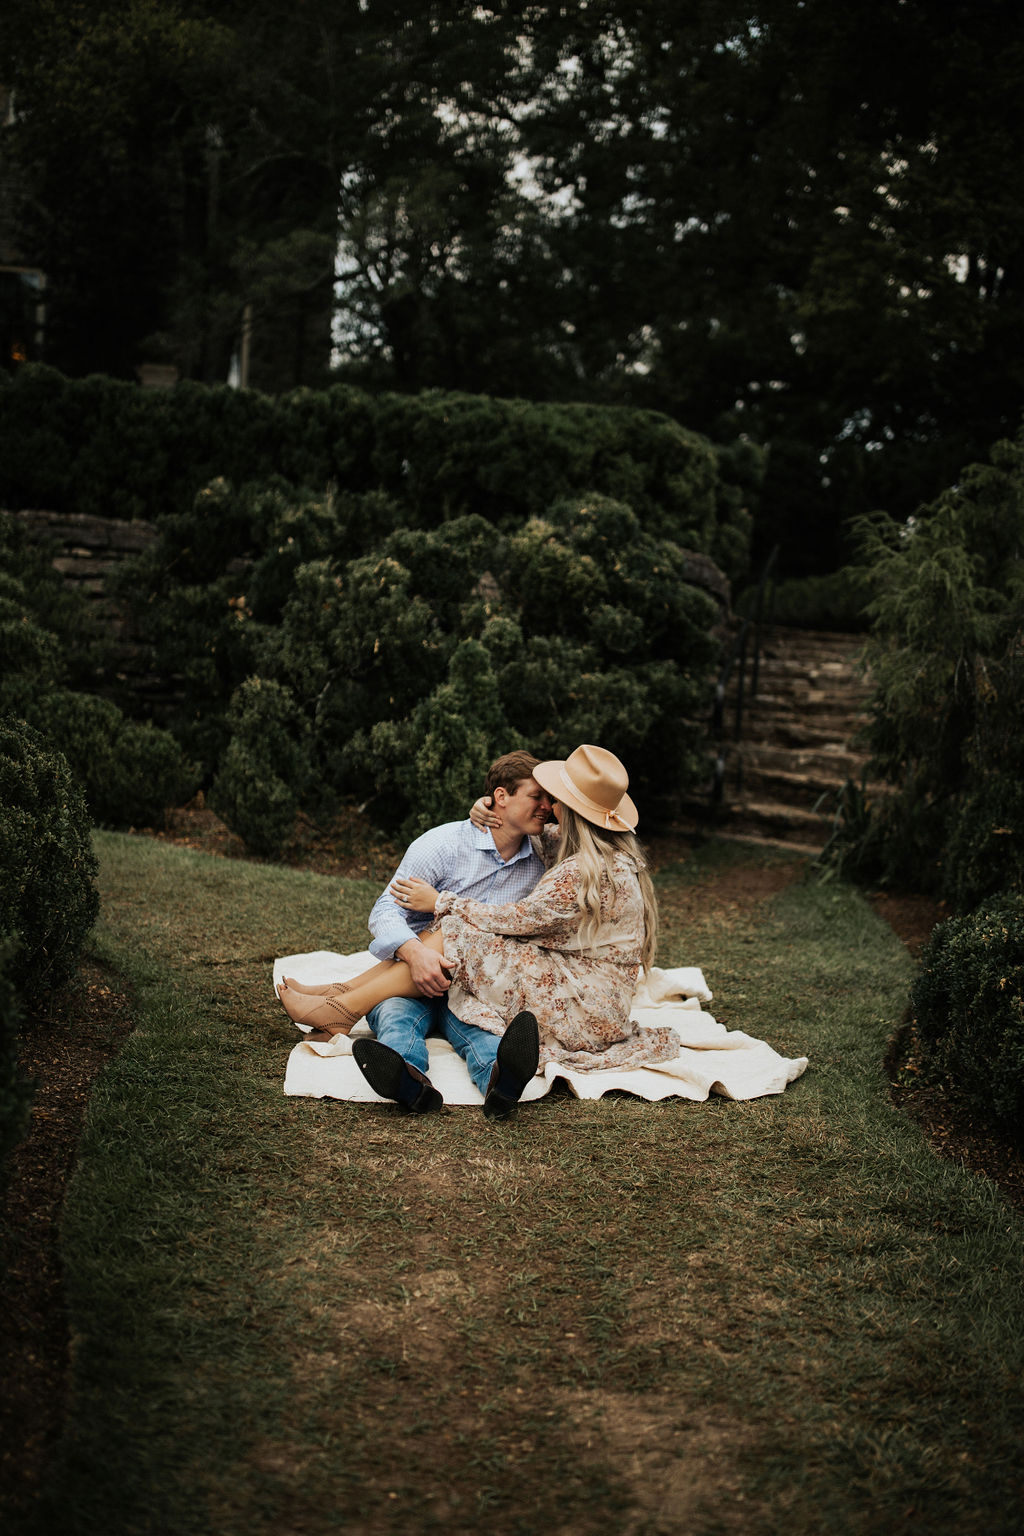 Garden Engagement Session captured by Sydney Lauren Photography | Nashville Bride Guide